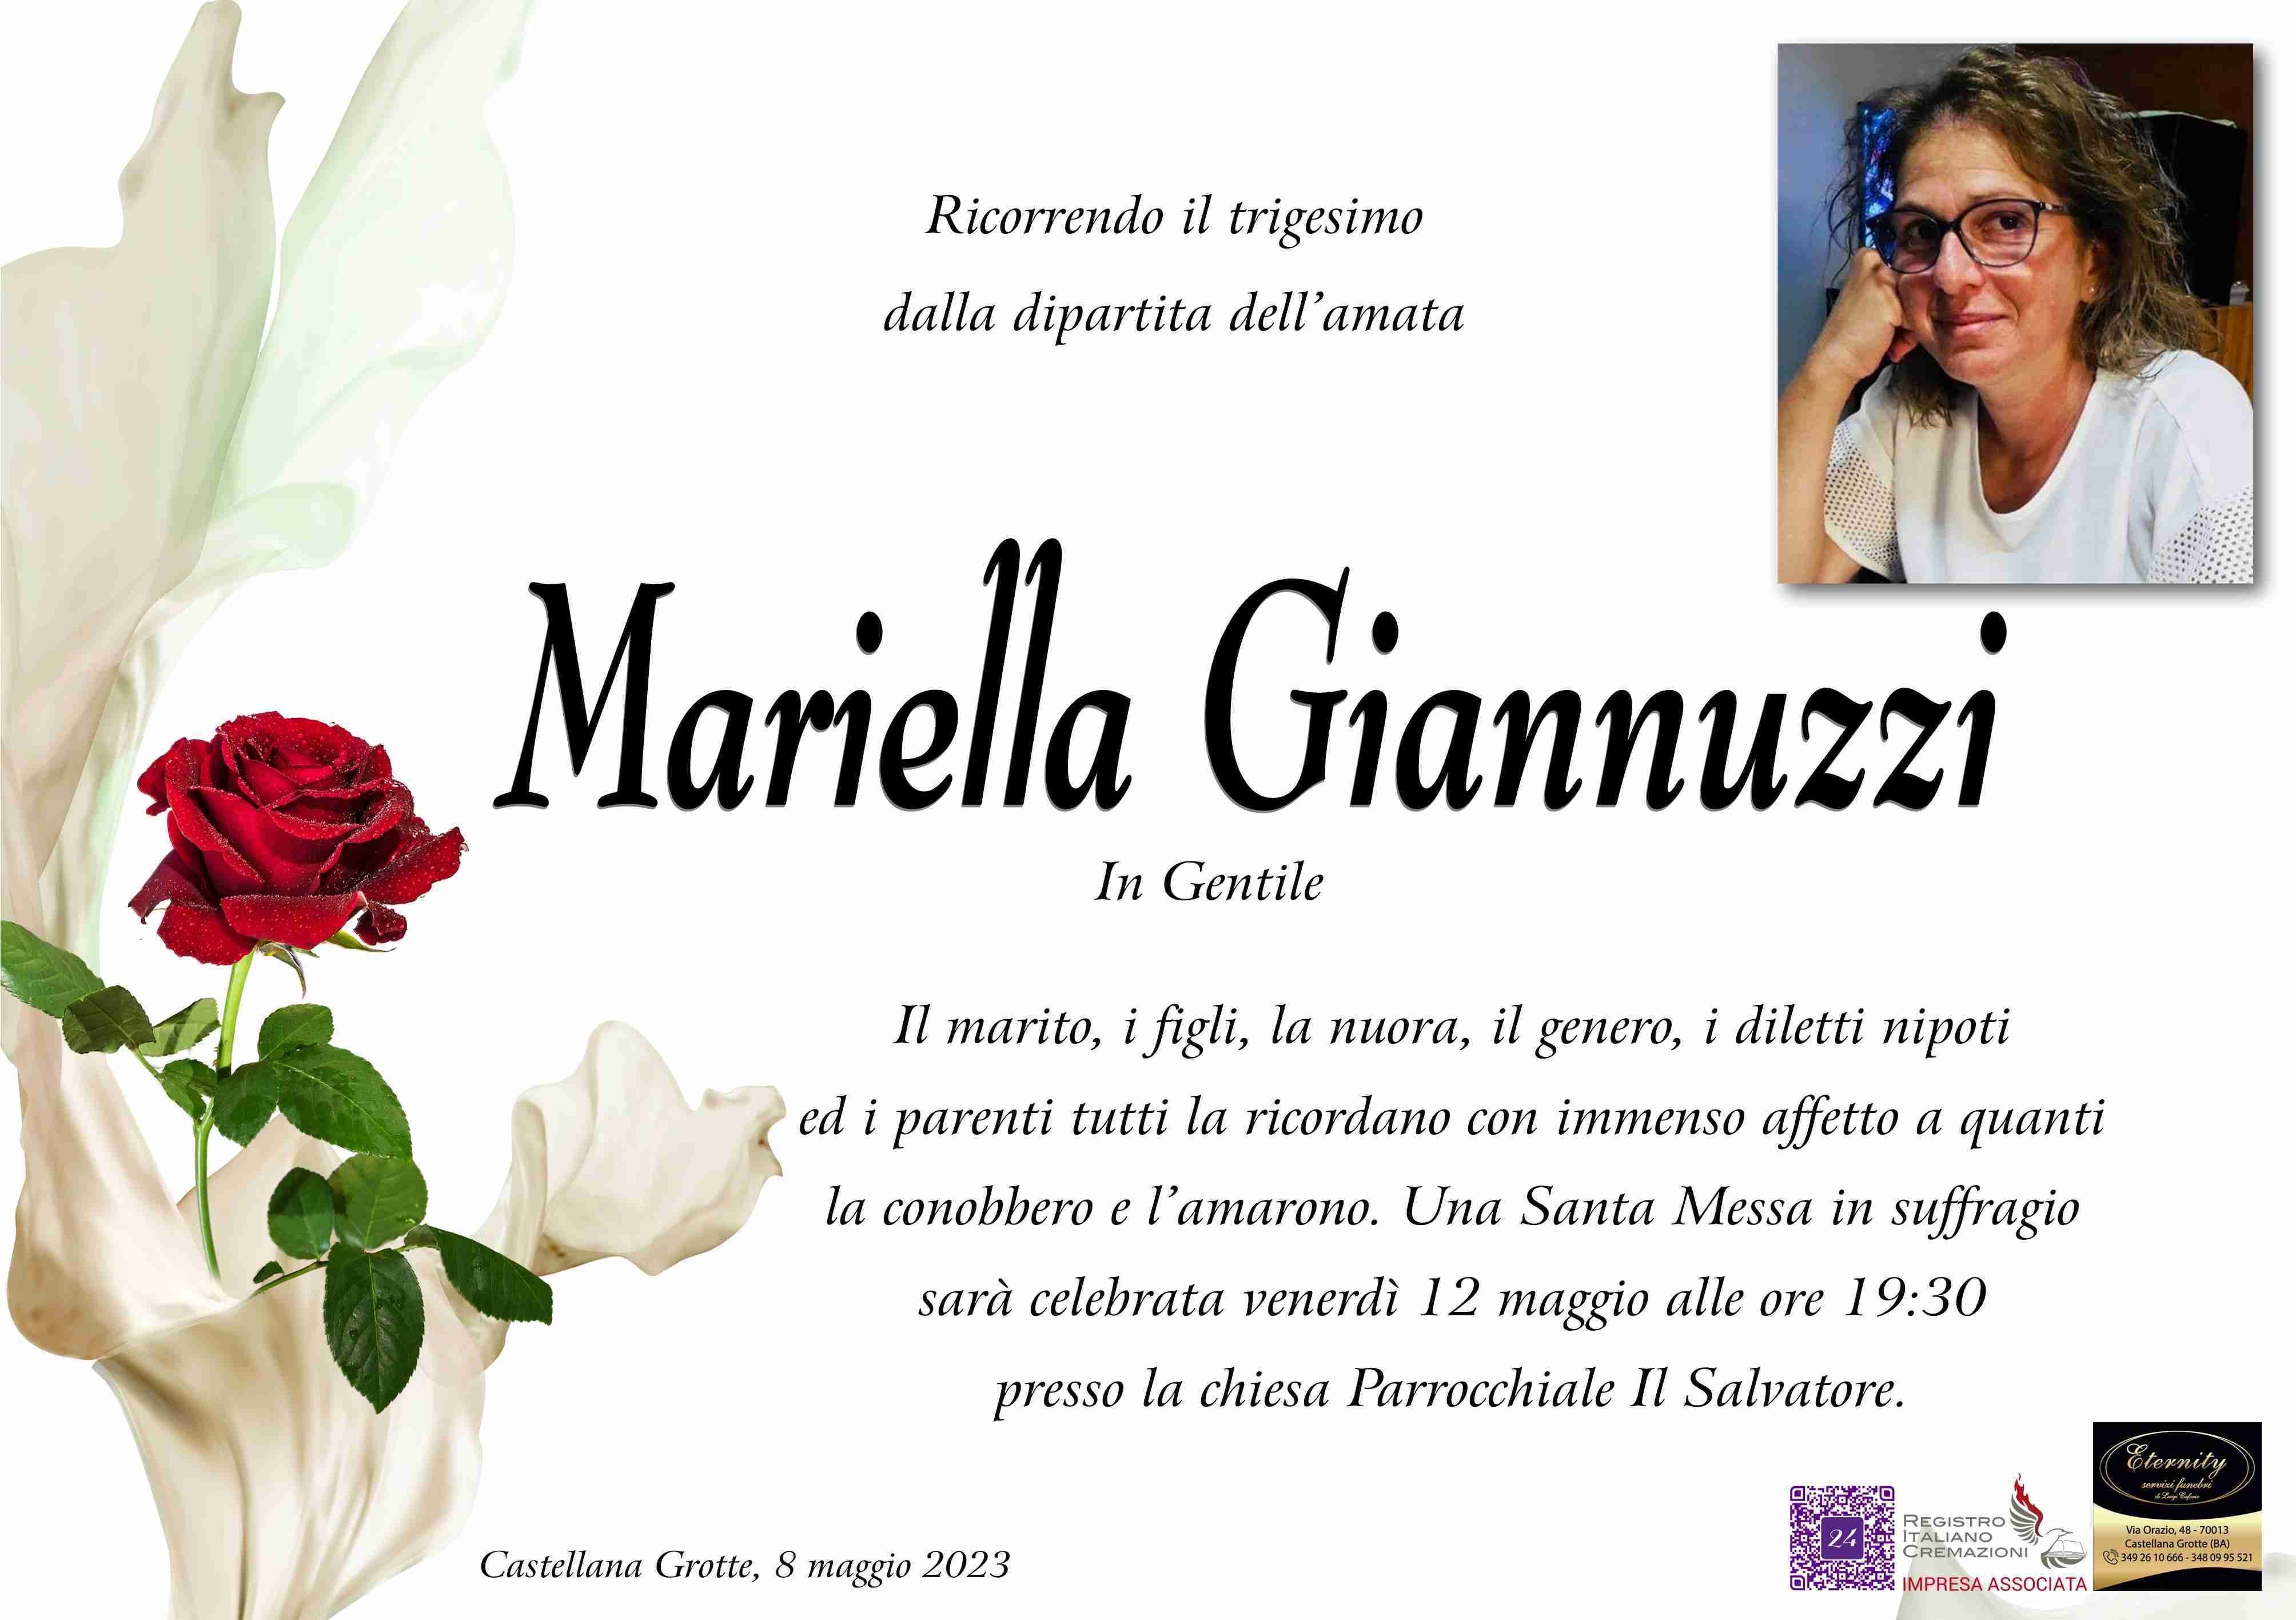 Mariella Giannuzzi